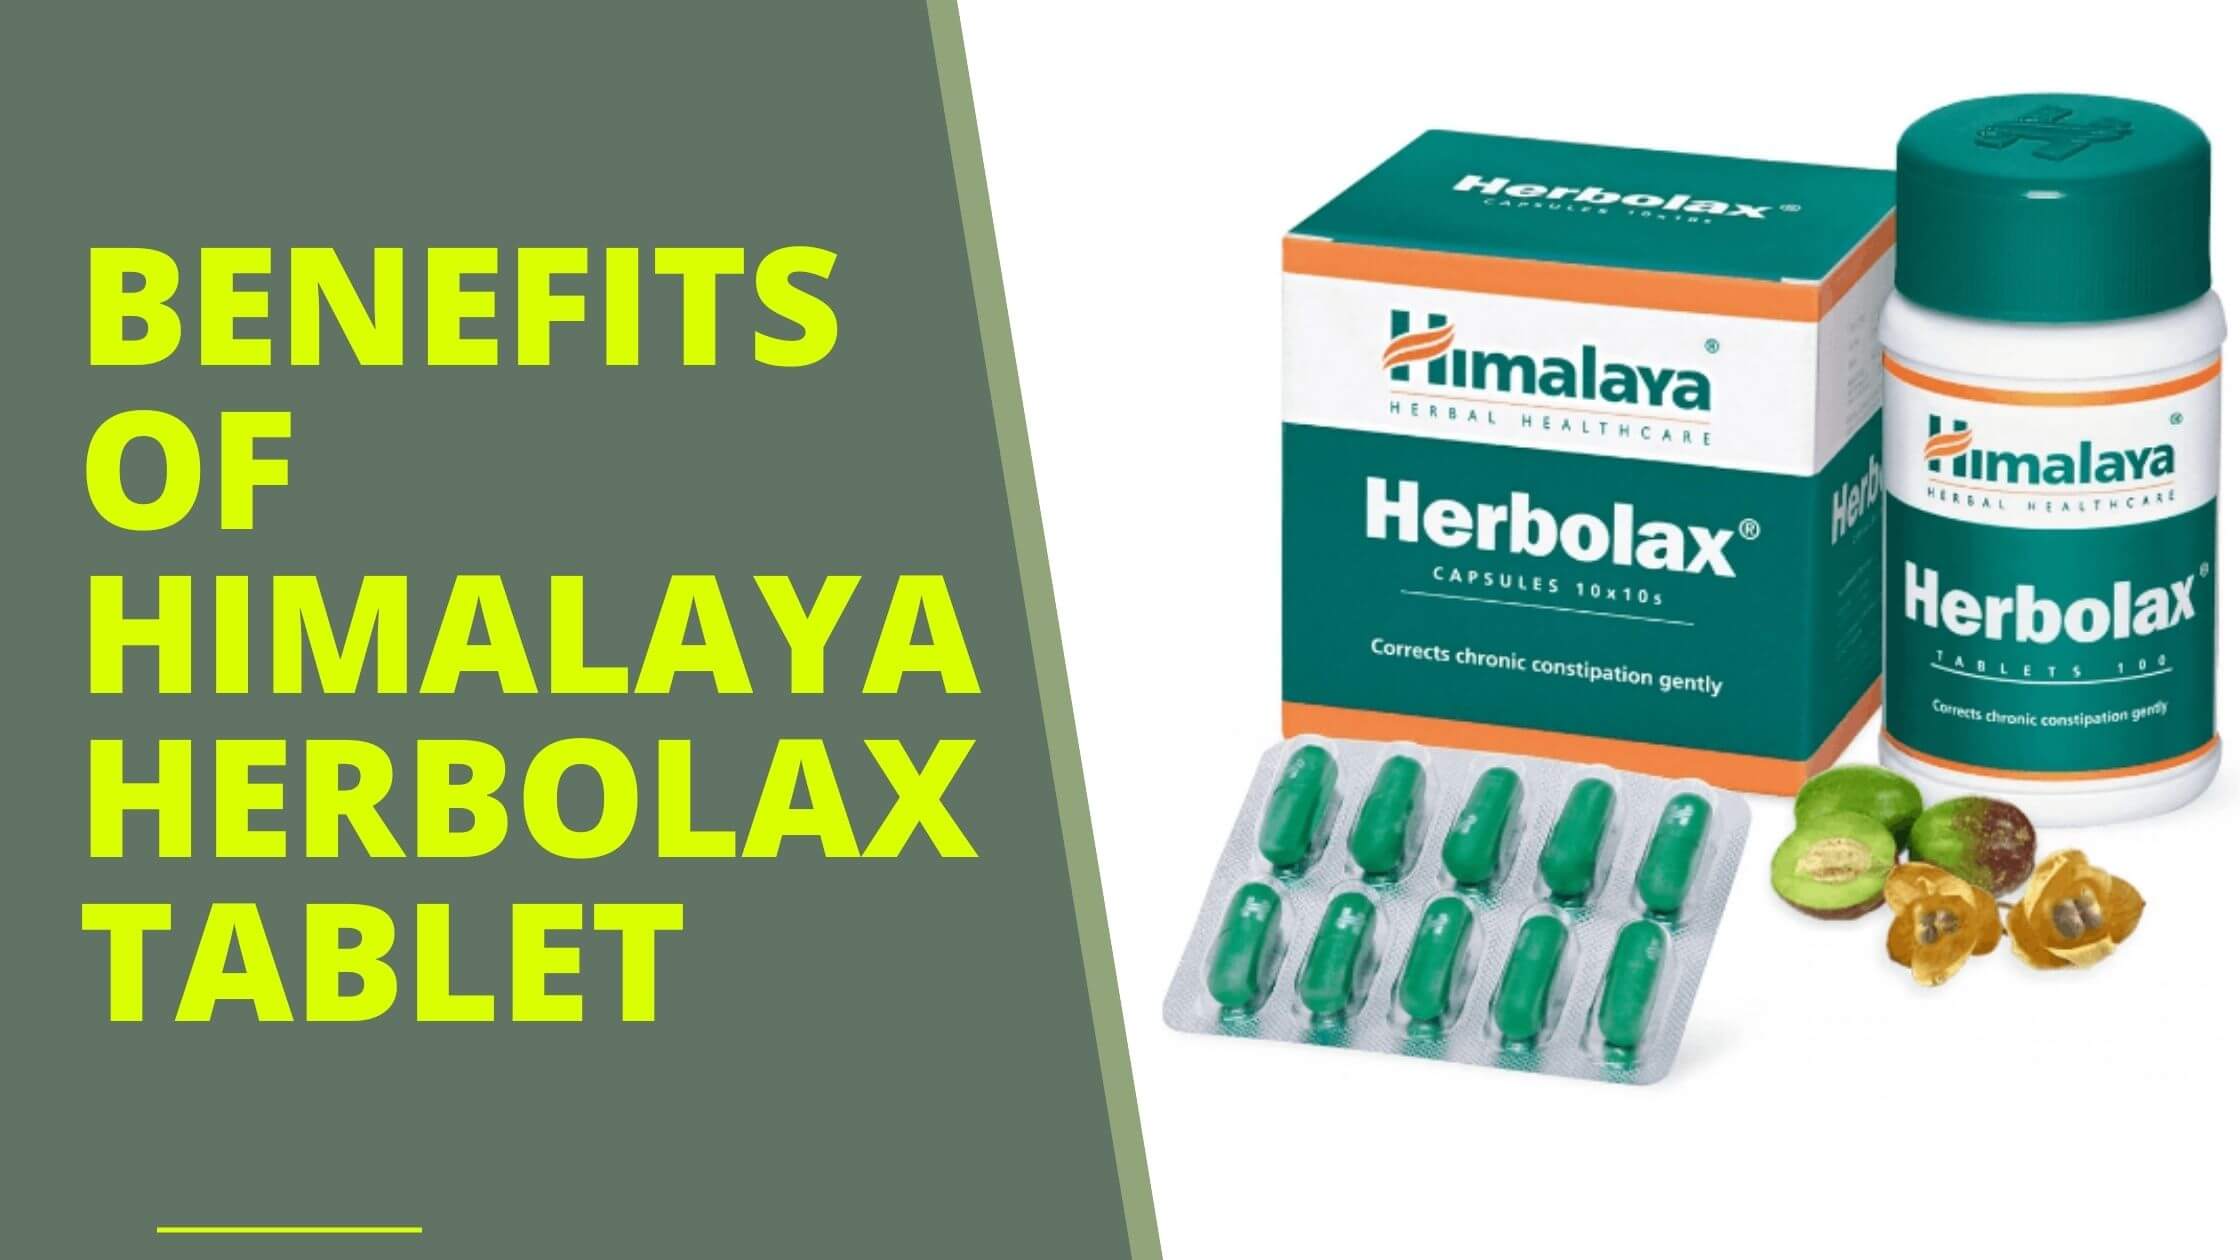 HImalaya Herbolax Tablet